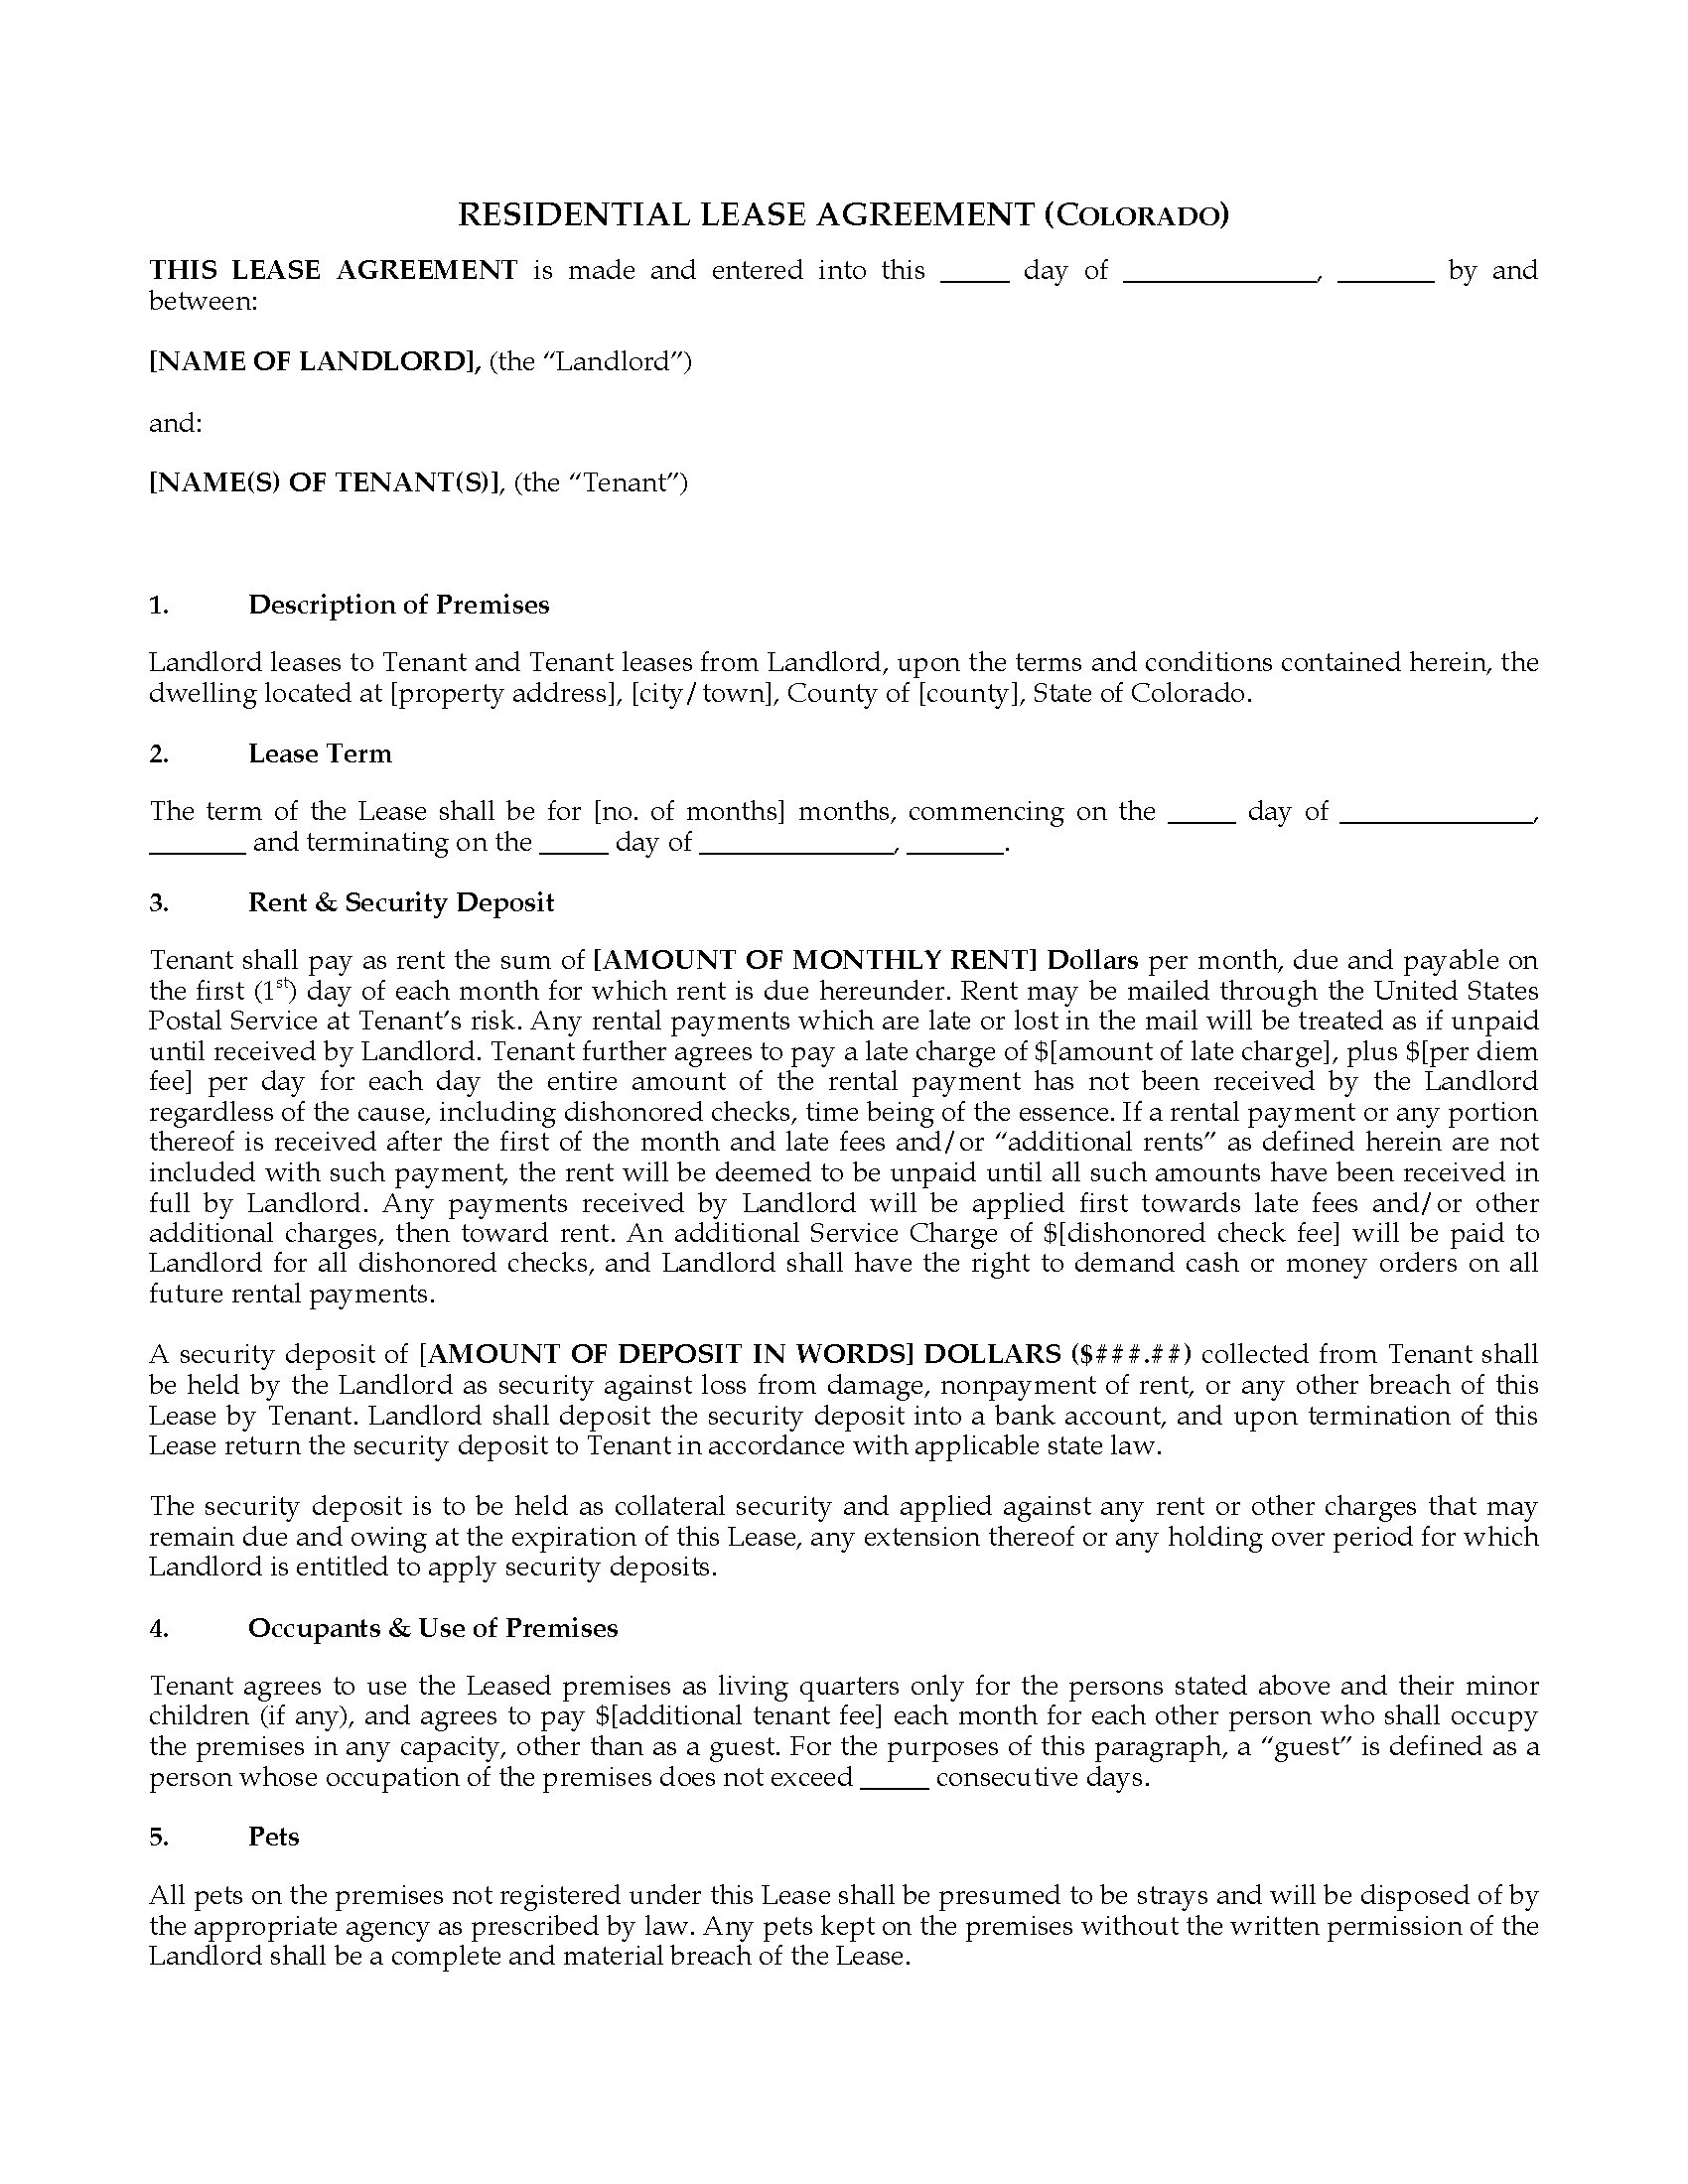 Colorado Residential Lease Agreement Colorado Fixed Term Residential Lease Agreement